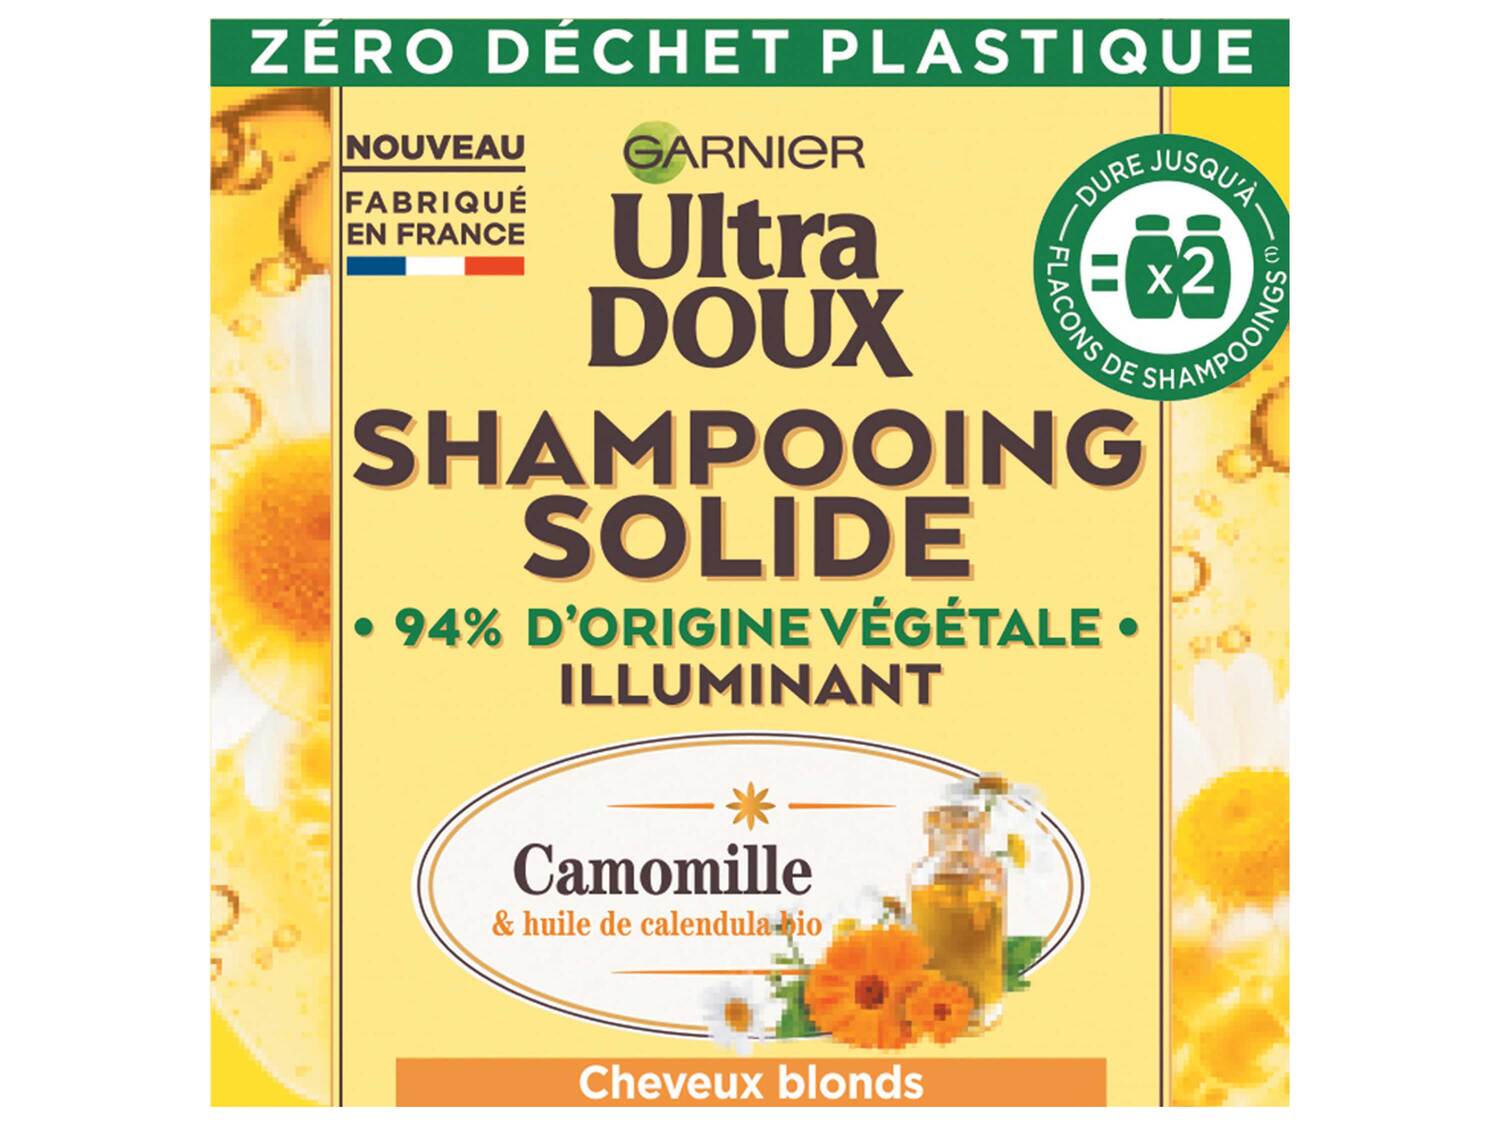 Garnier Ultra Doux shampooing solide , le prix 4.48 &#8364; 
- Vari&eacute;t&eacute;s ...